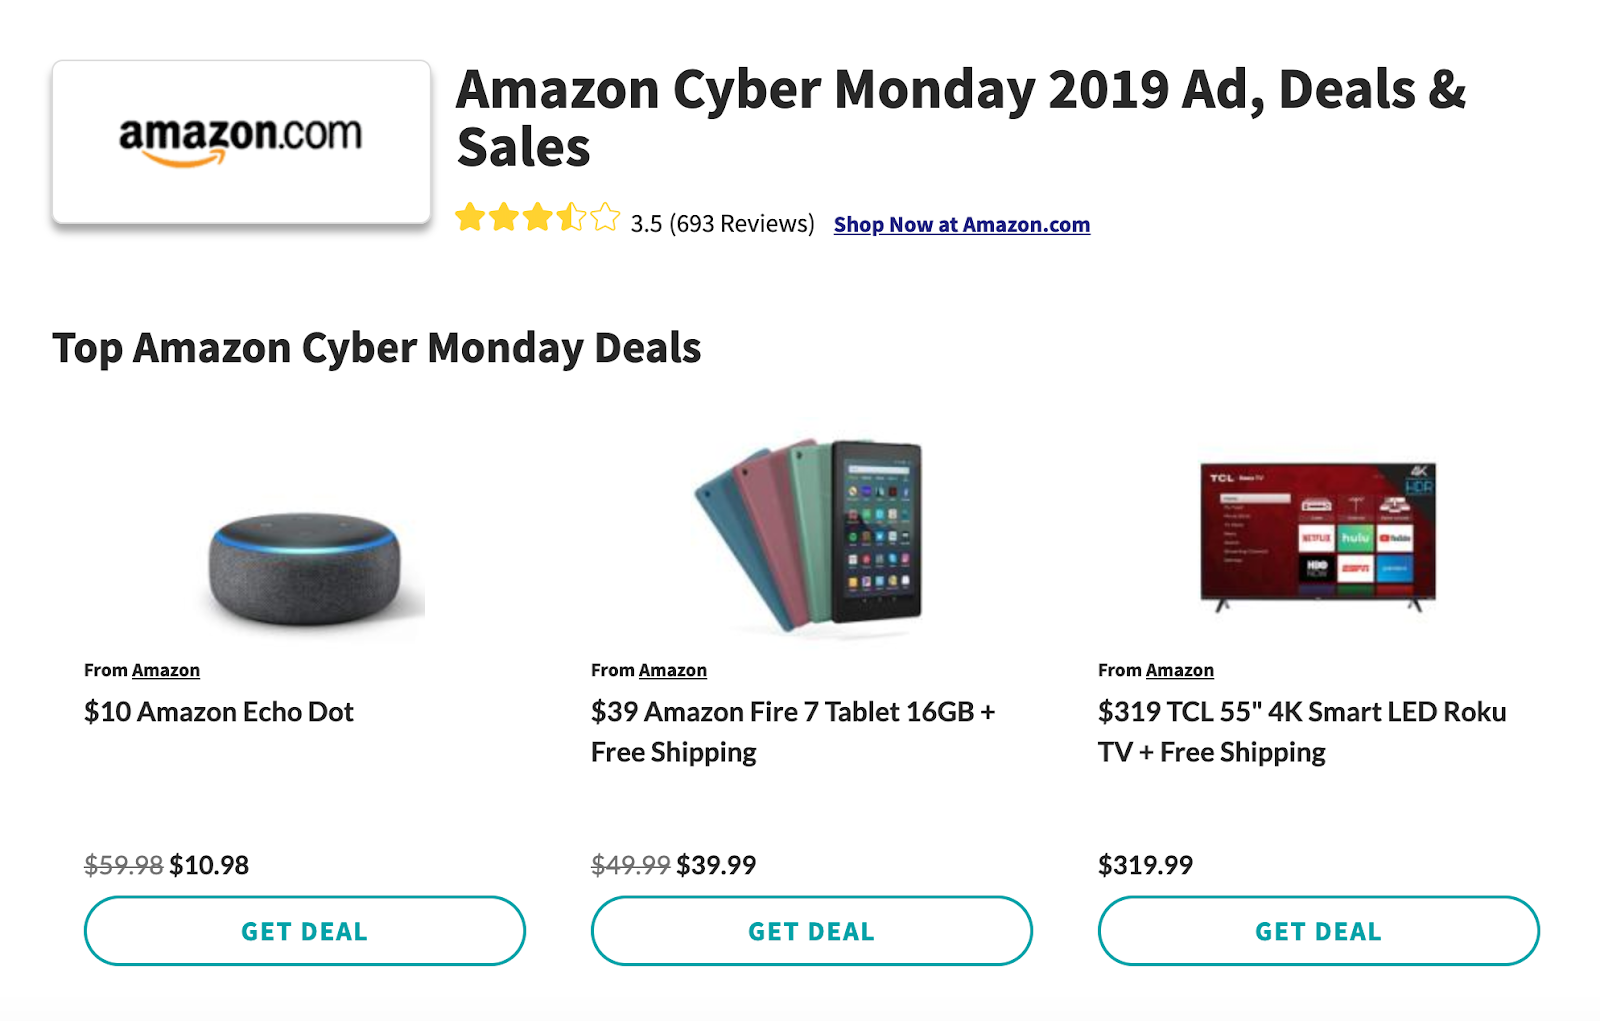 Amazon Cyber Monday deals 2019